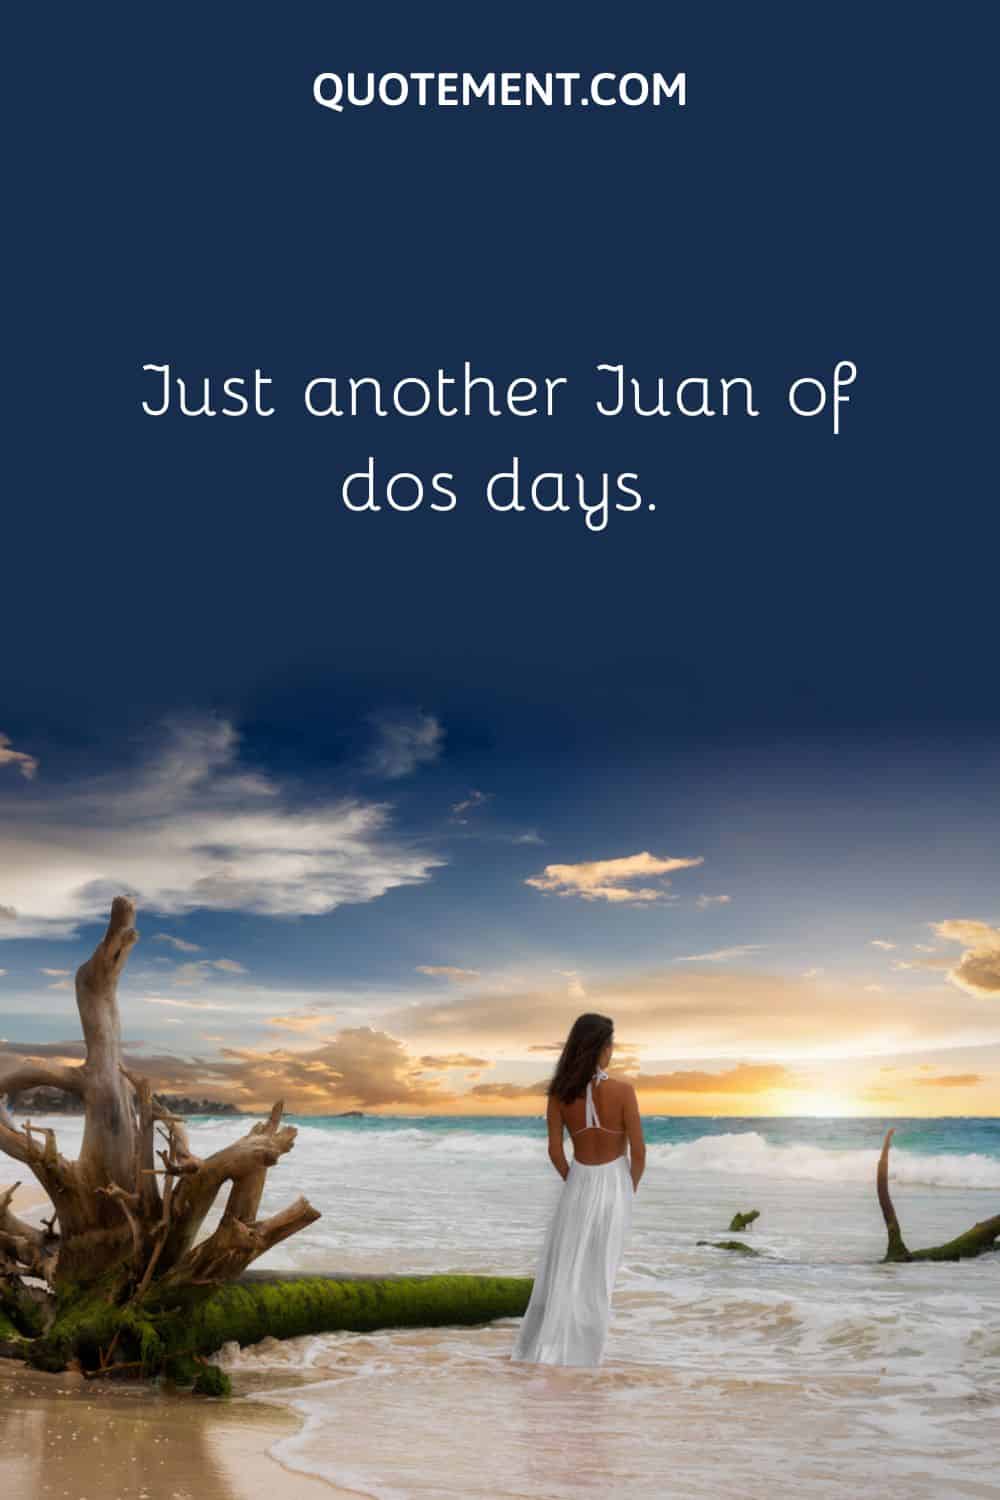 Just another Juan of dos days